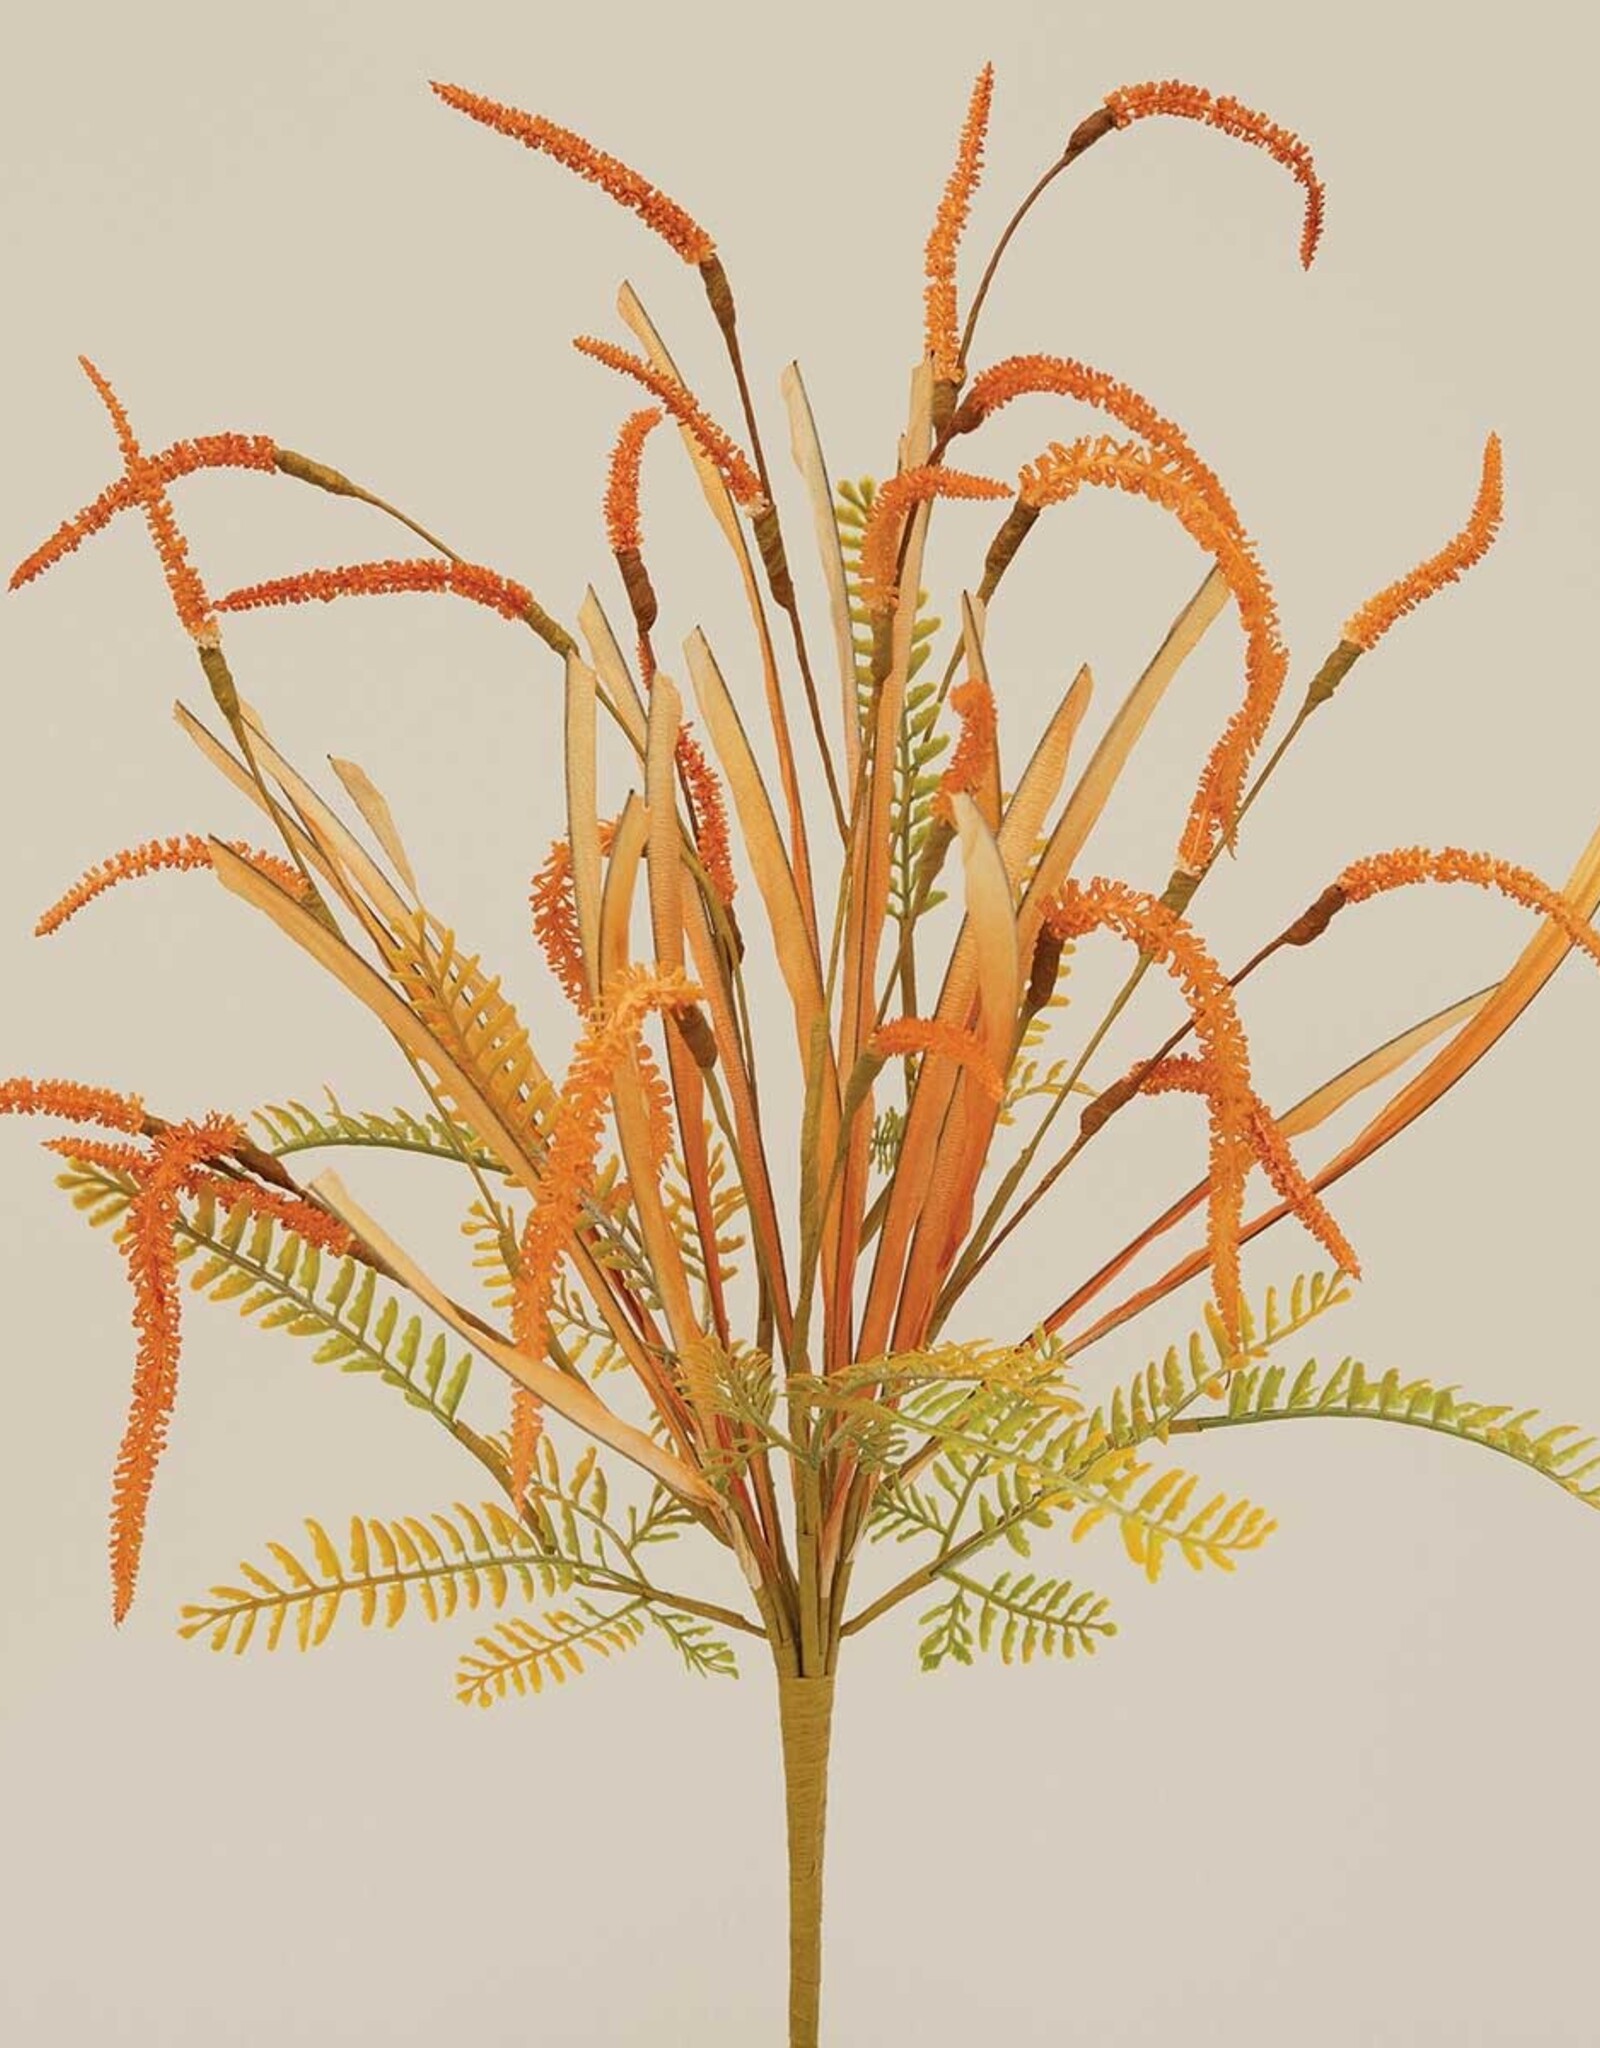 Meravic 22" Field Grass Bush - Orange